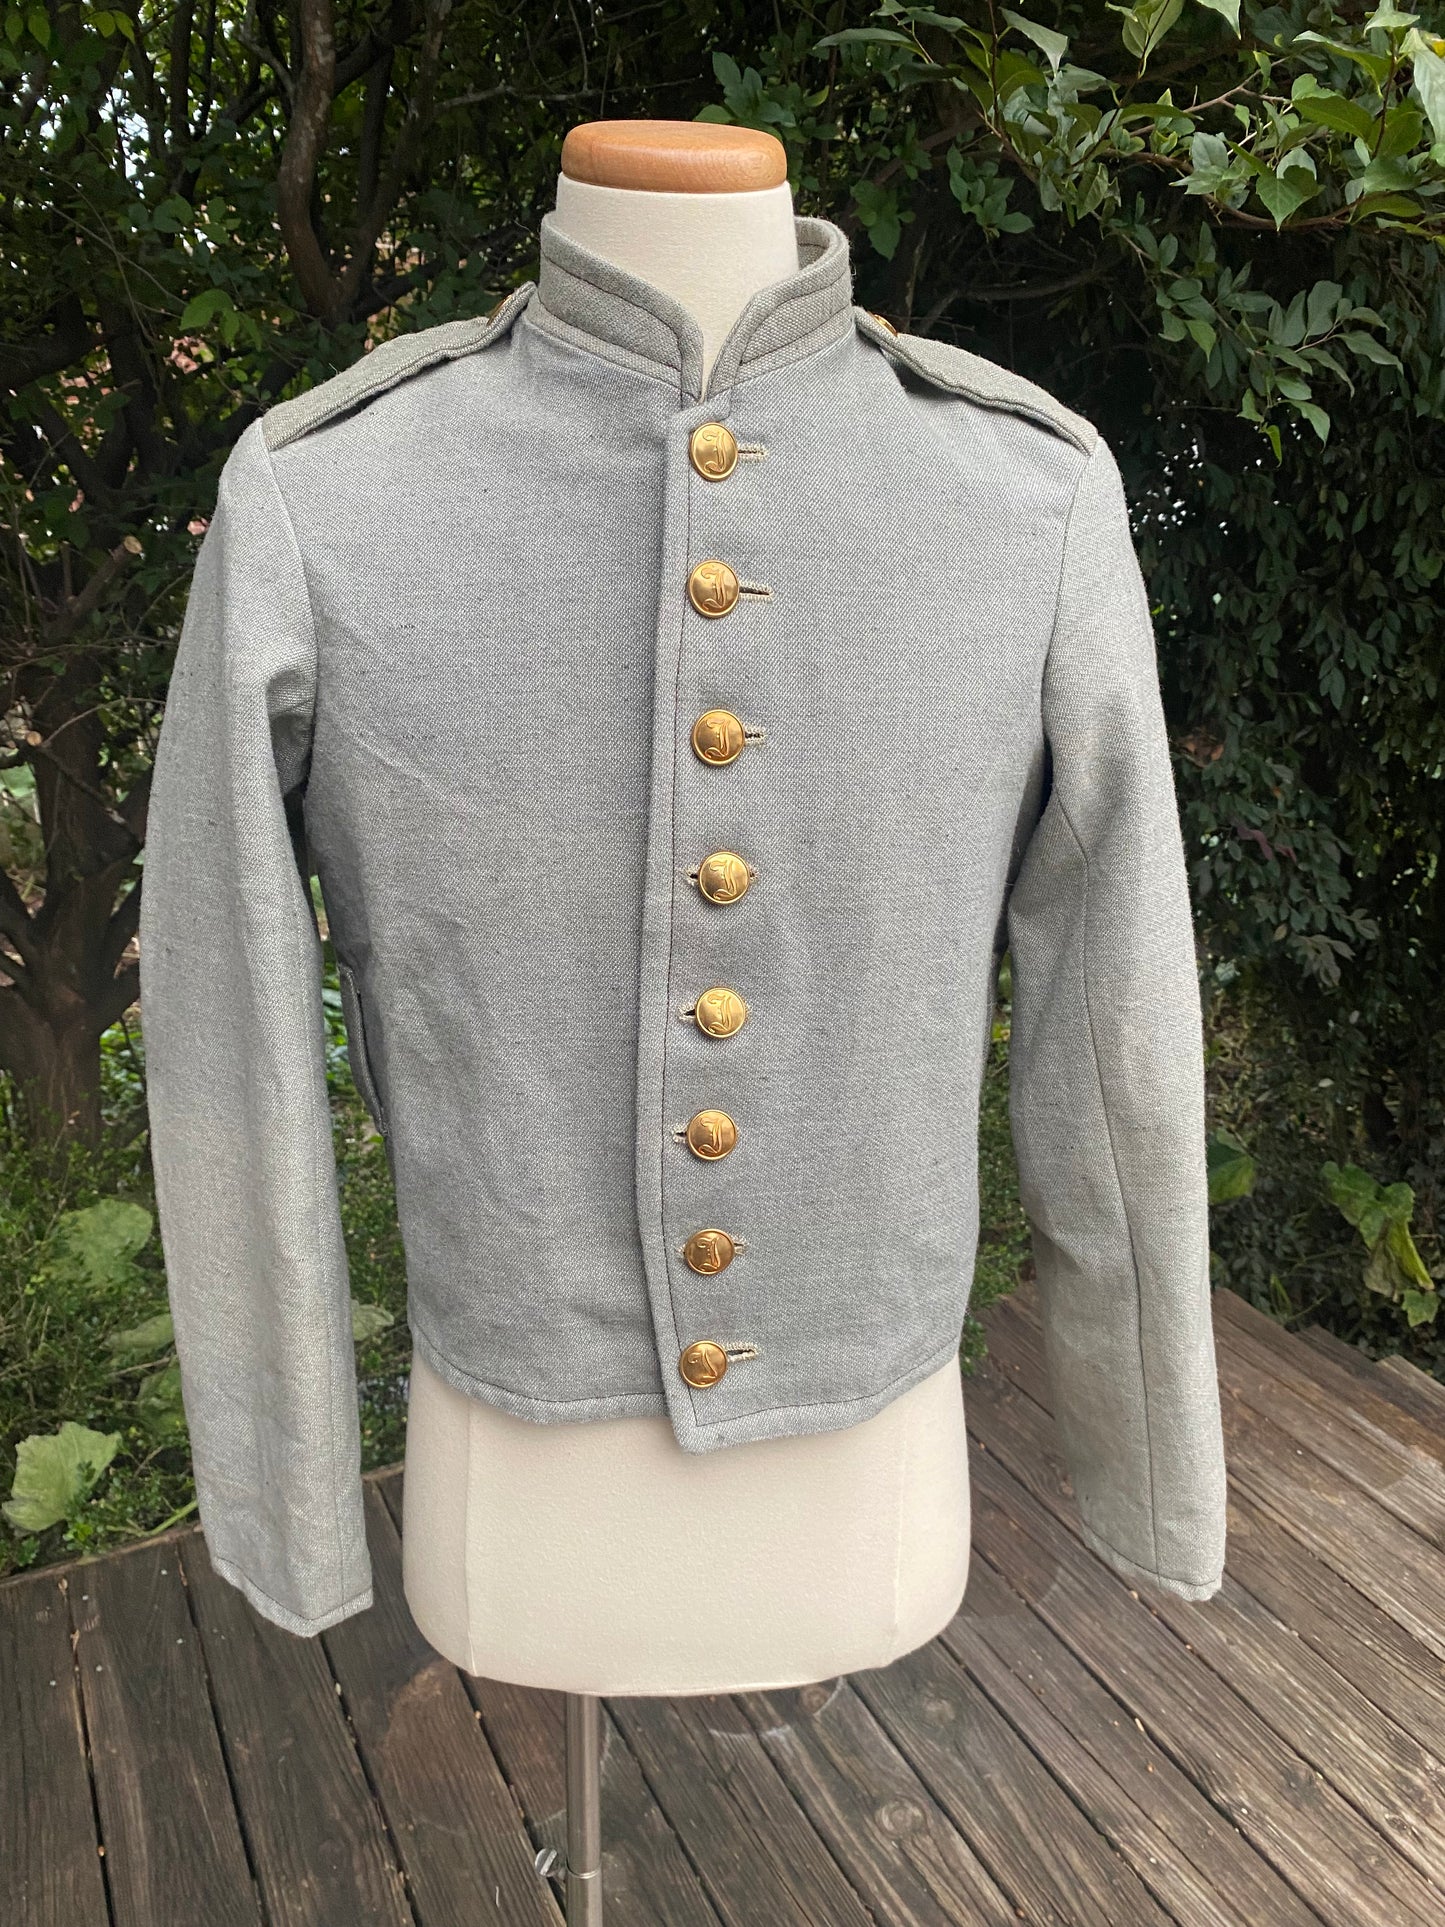 5th South Carolina Richmond Clothing Bureau Jacket 1862-1863